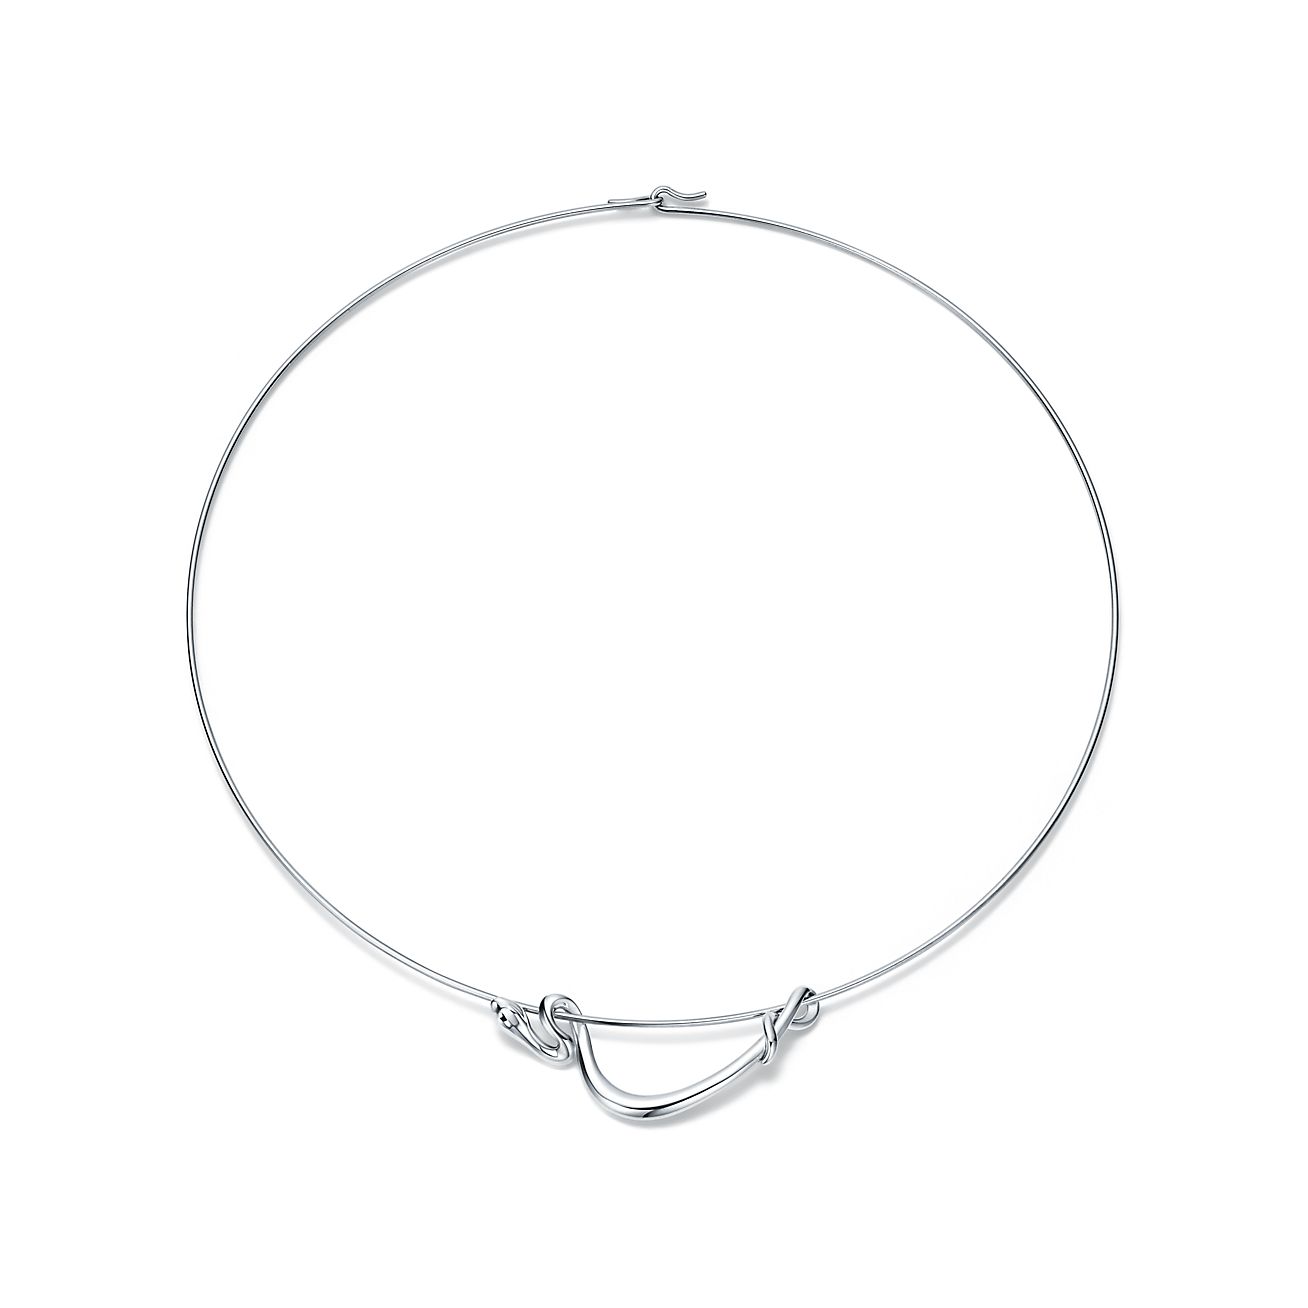 Elsa Peretti® Snake wire necklace in 